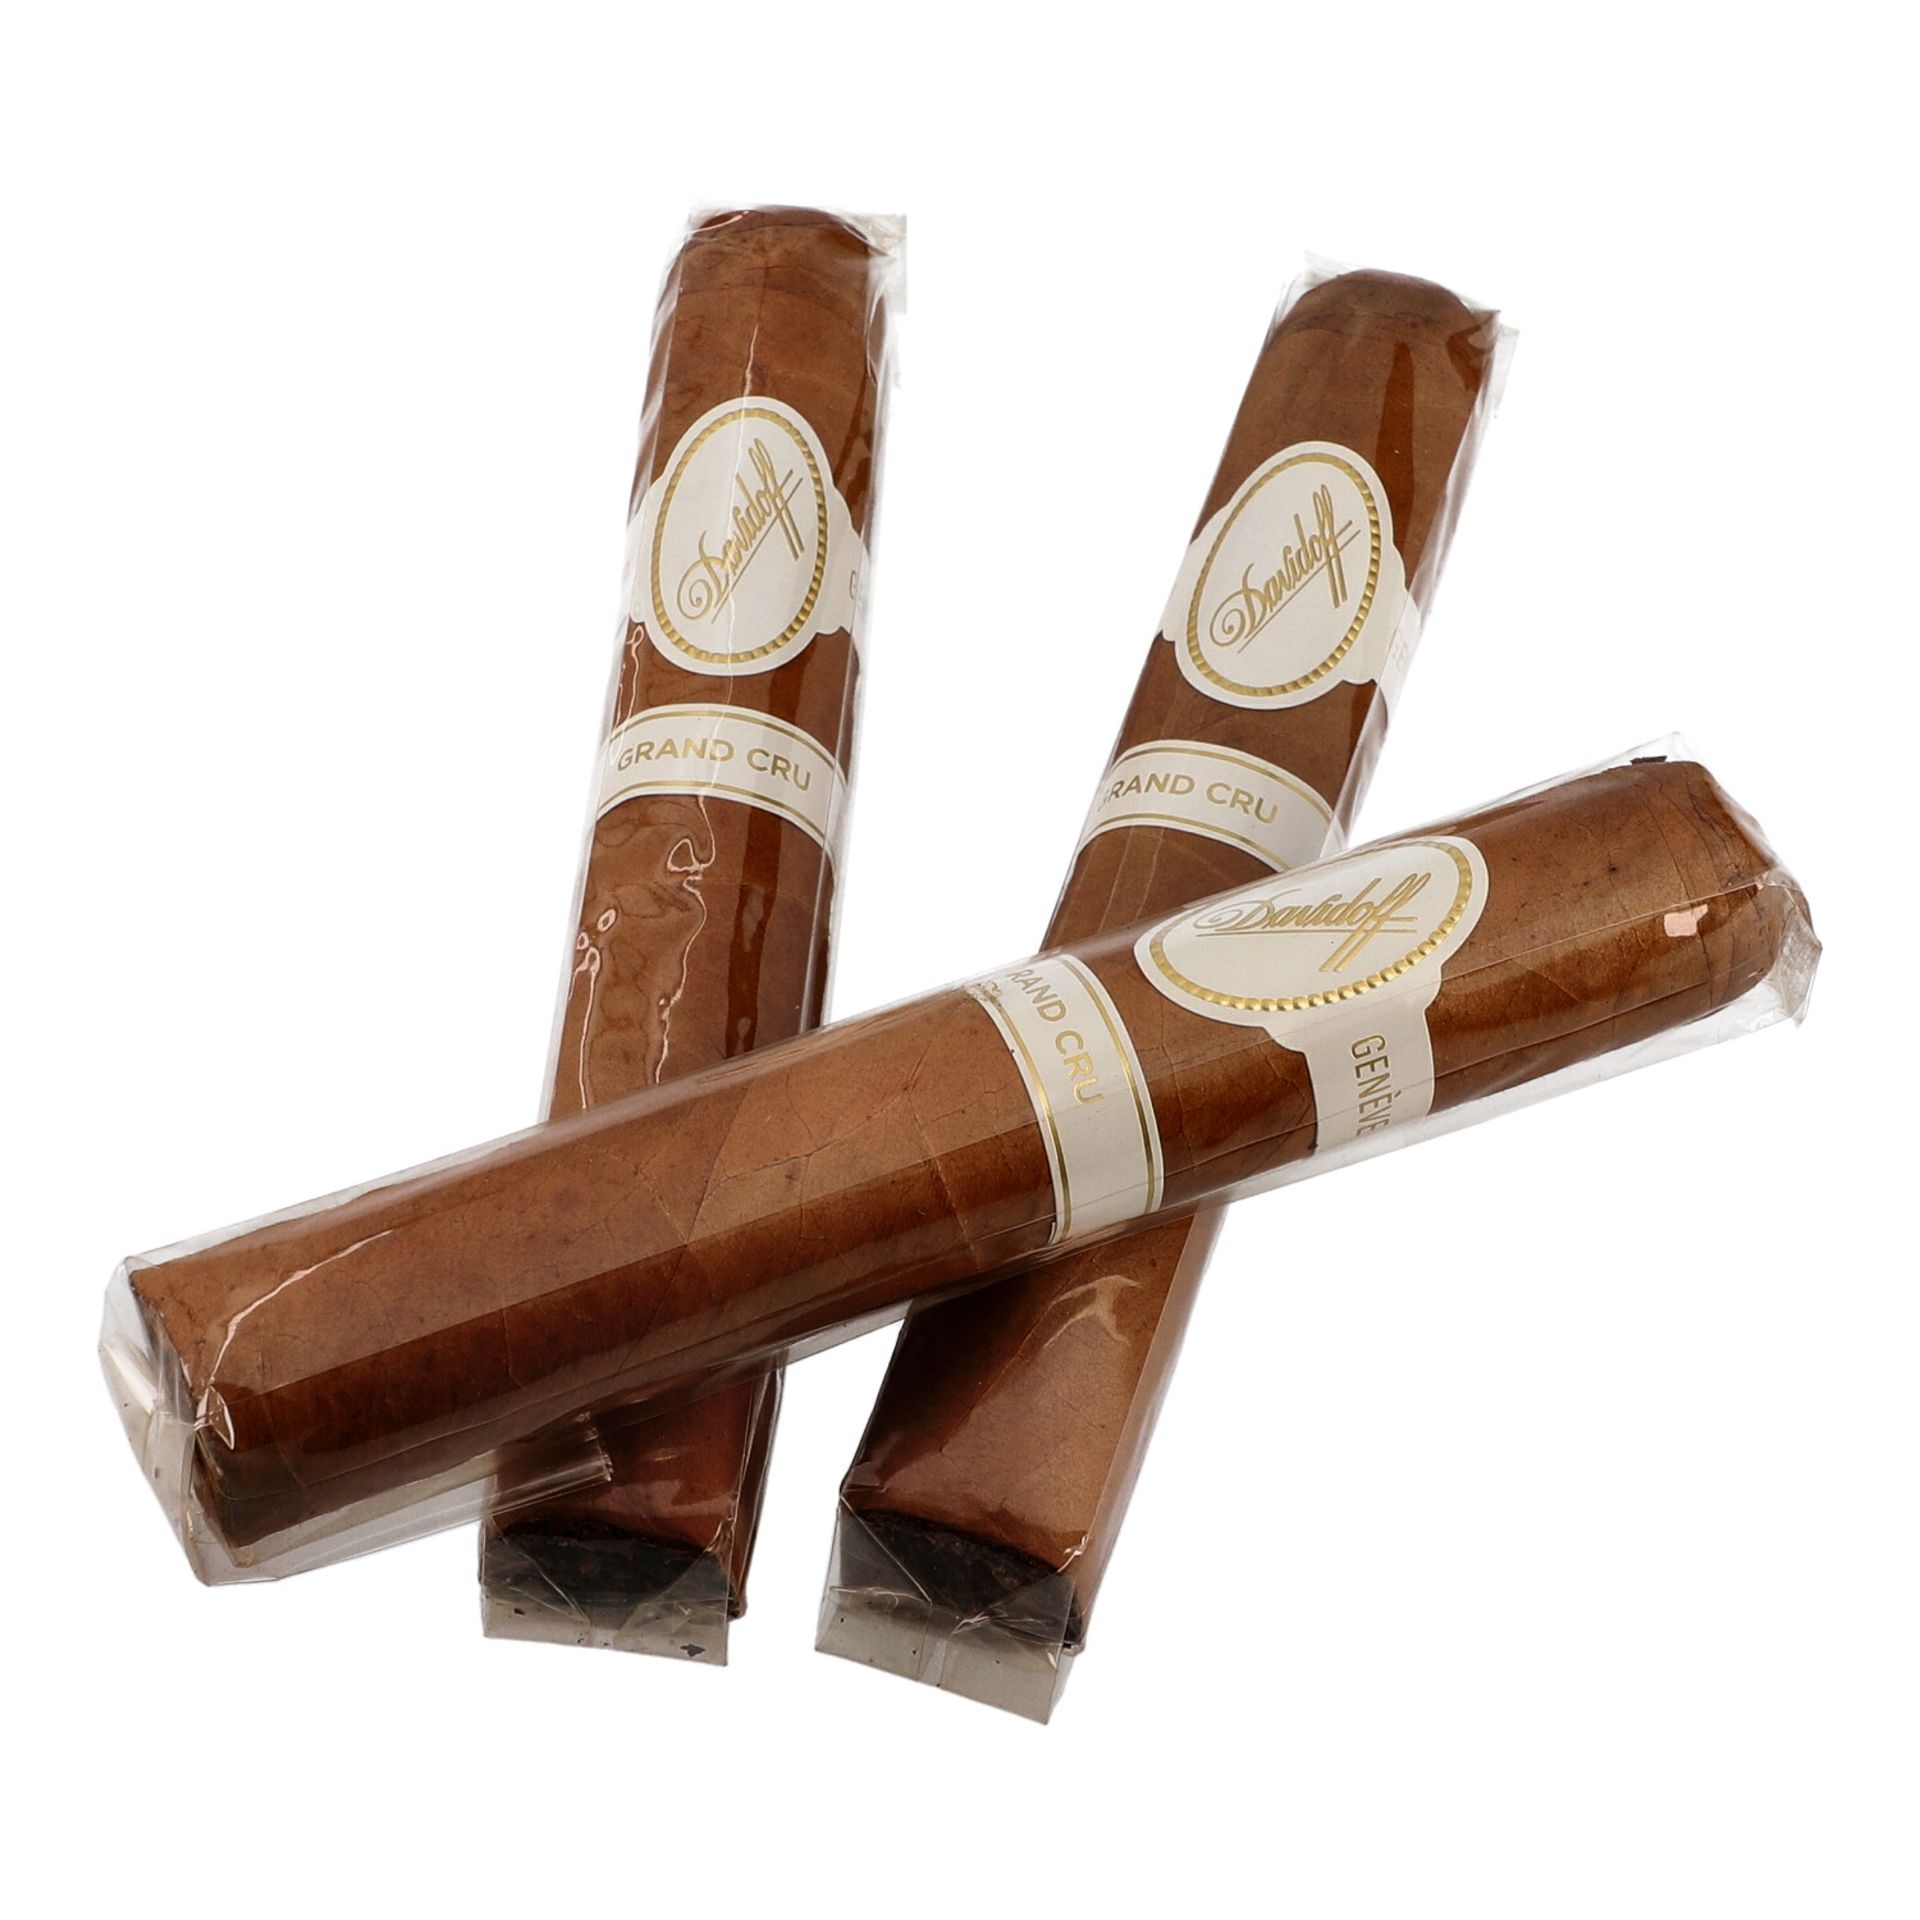 KONVOLUT 3x Davidoff Grand Cru Zigarren. - Bild 2 aus 2